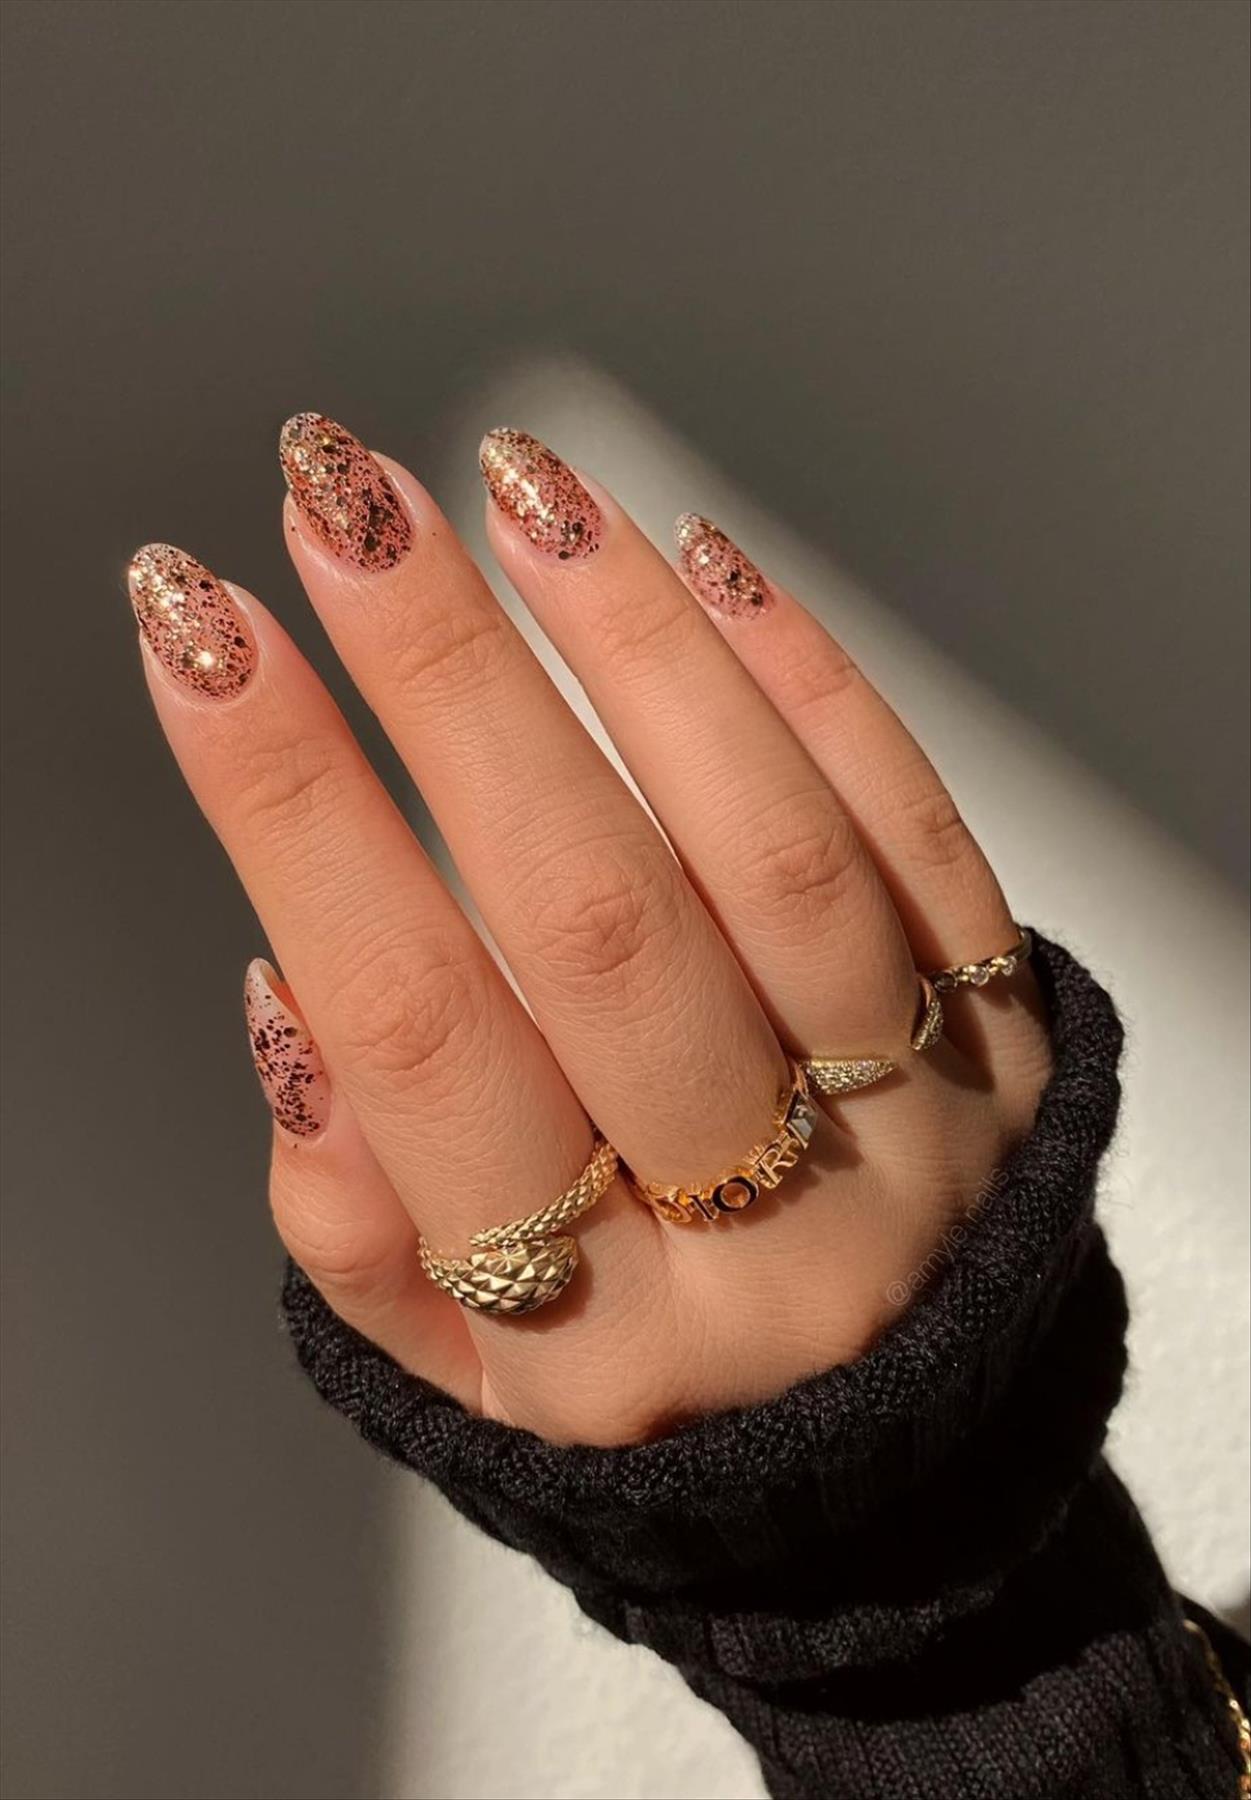 shimmy winter nails design